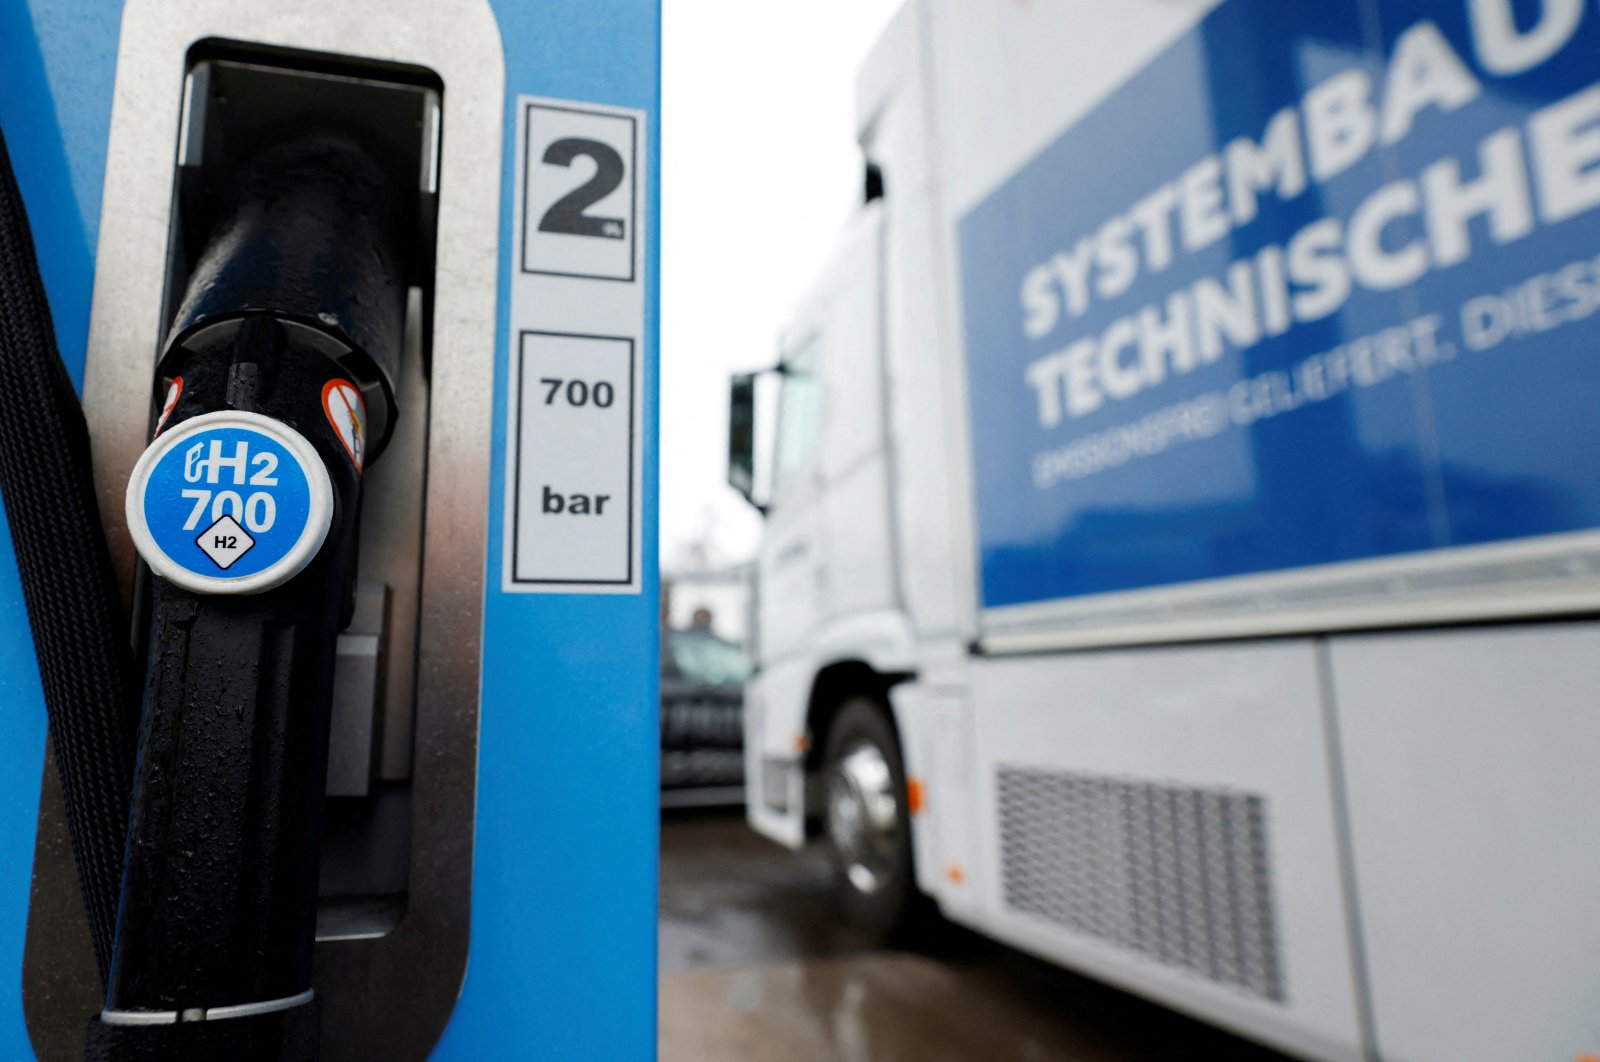 Jerman mengincar transportasi hidrogen hijau dari Türkiye melalui jaringan pipa